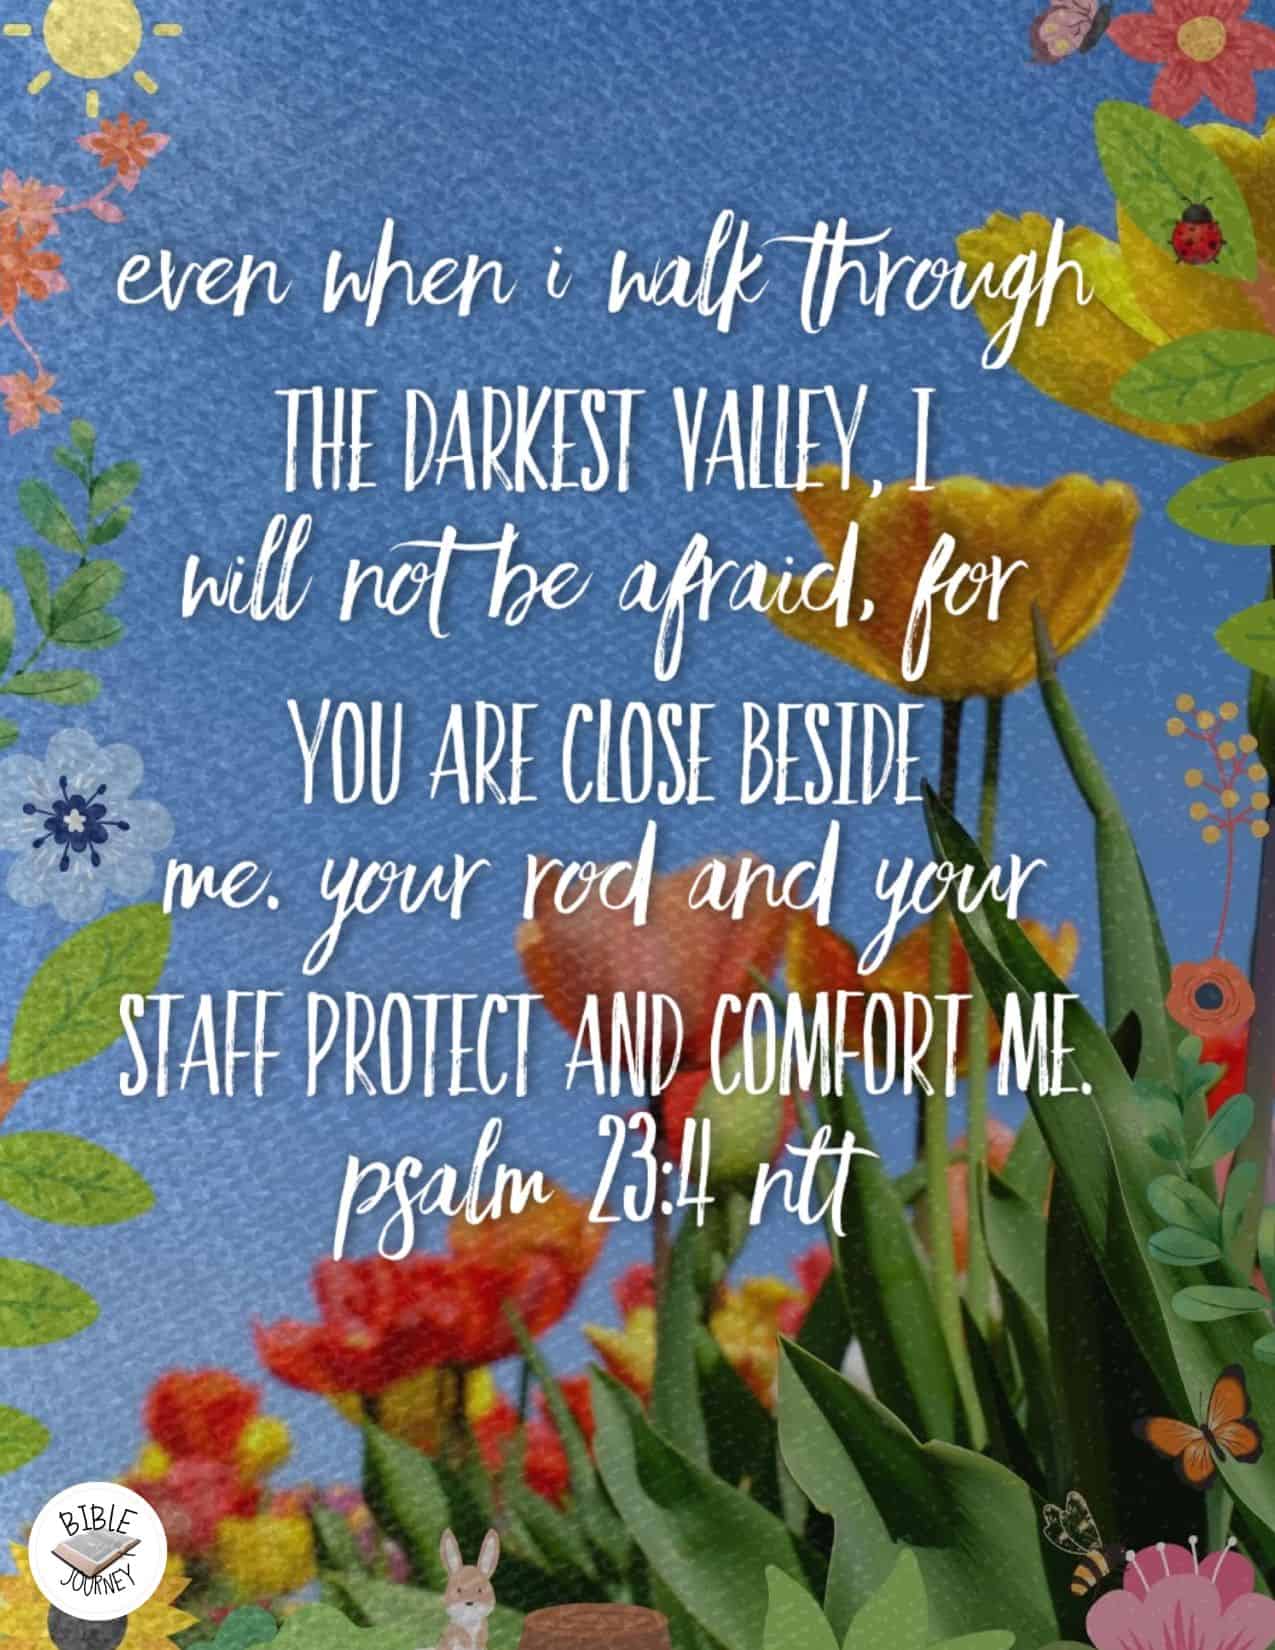 Comforting Bible Verse Image. Psalm 23:4 NLT